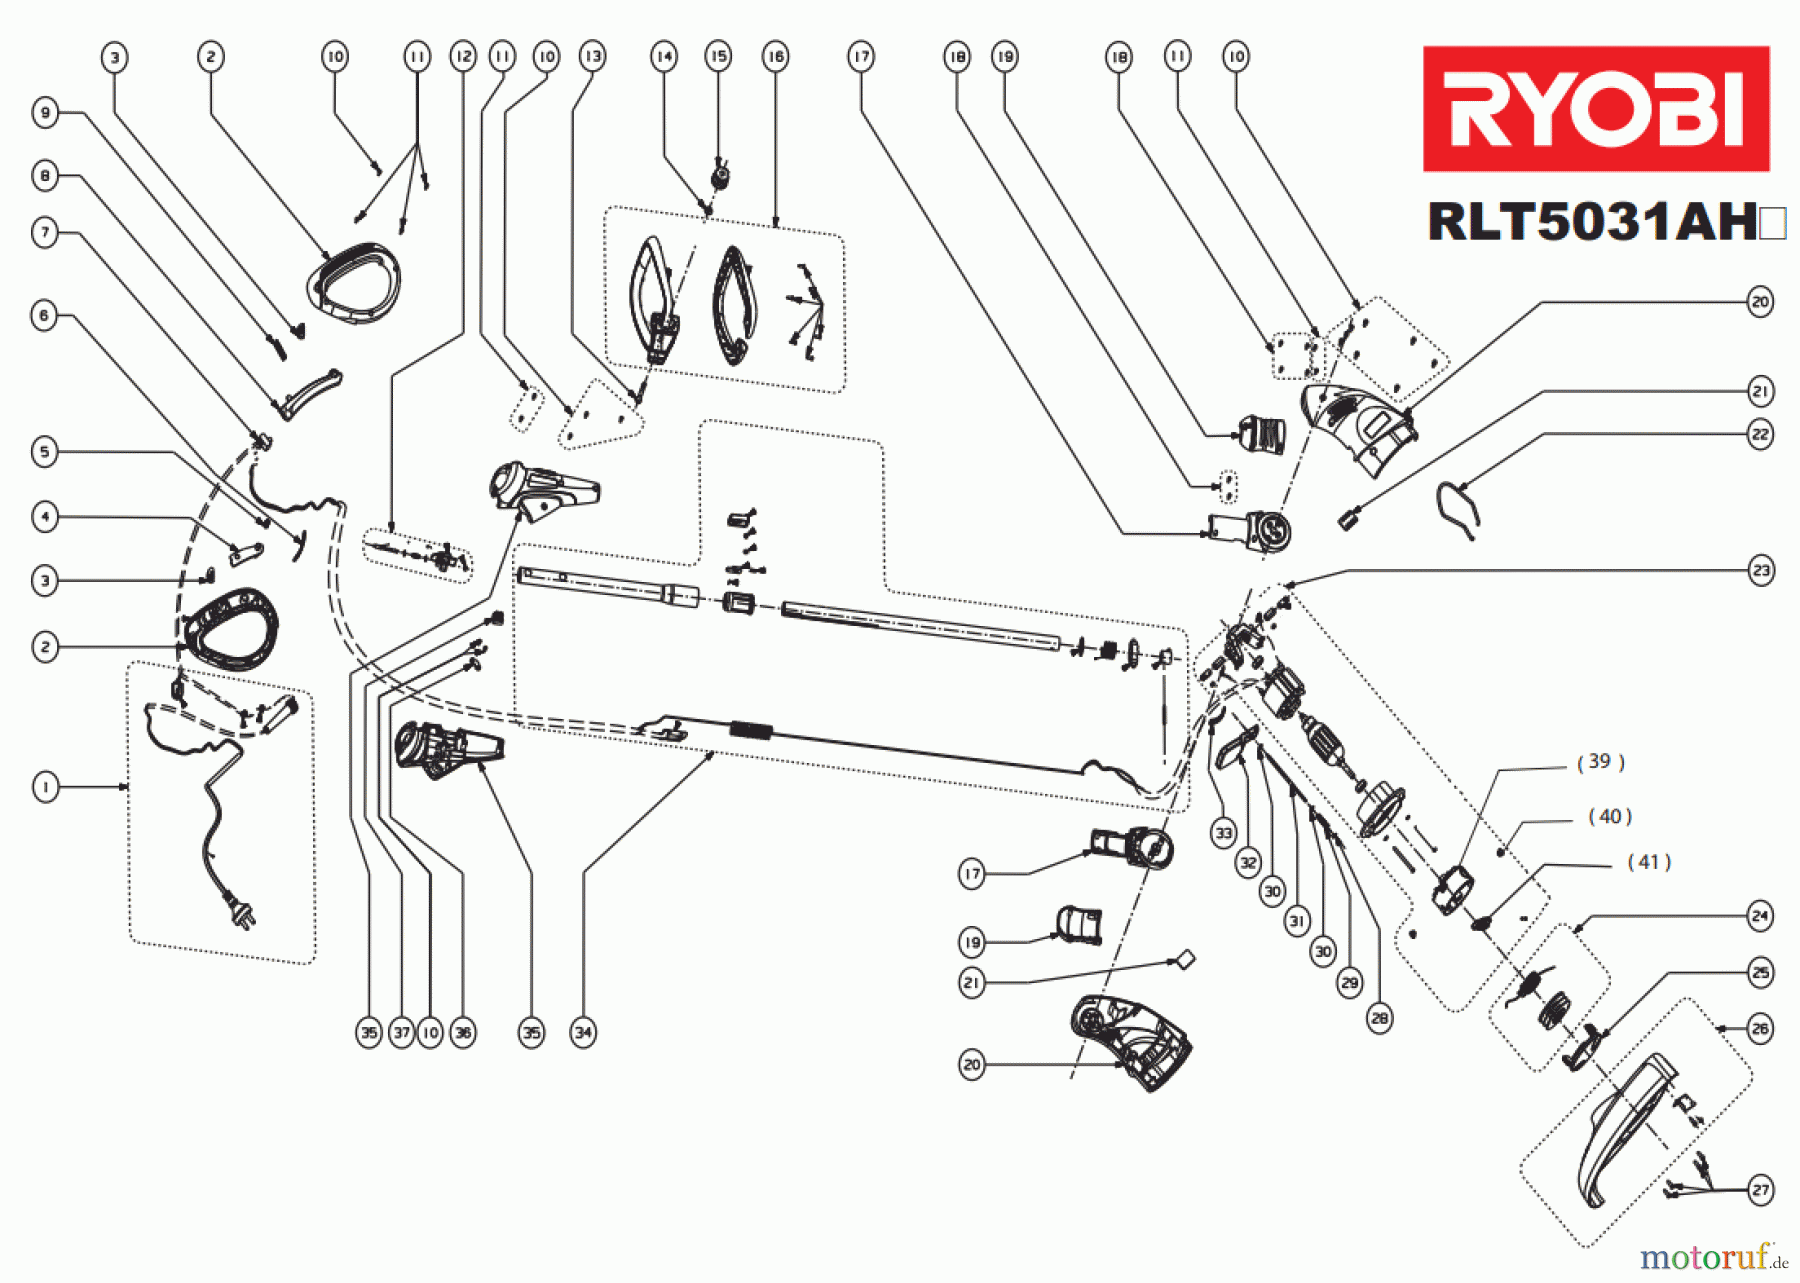  Ryobi Rasentrimmer Elektro RLT5031AH